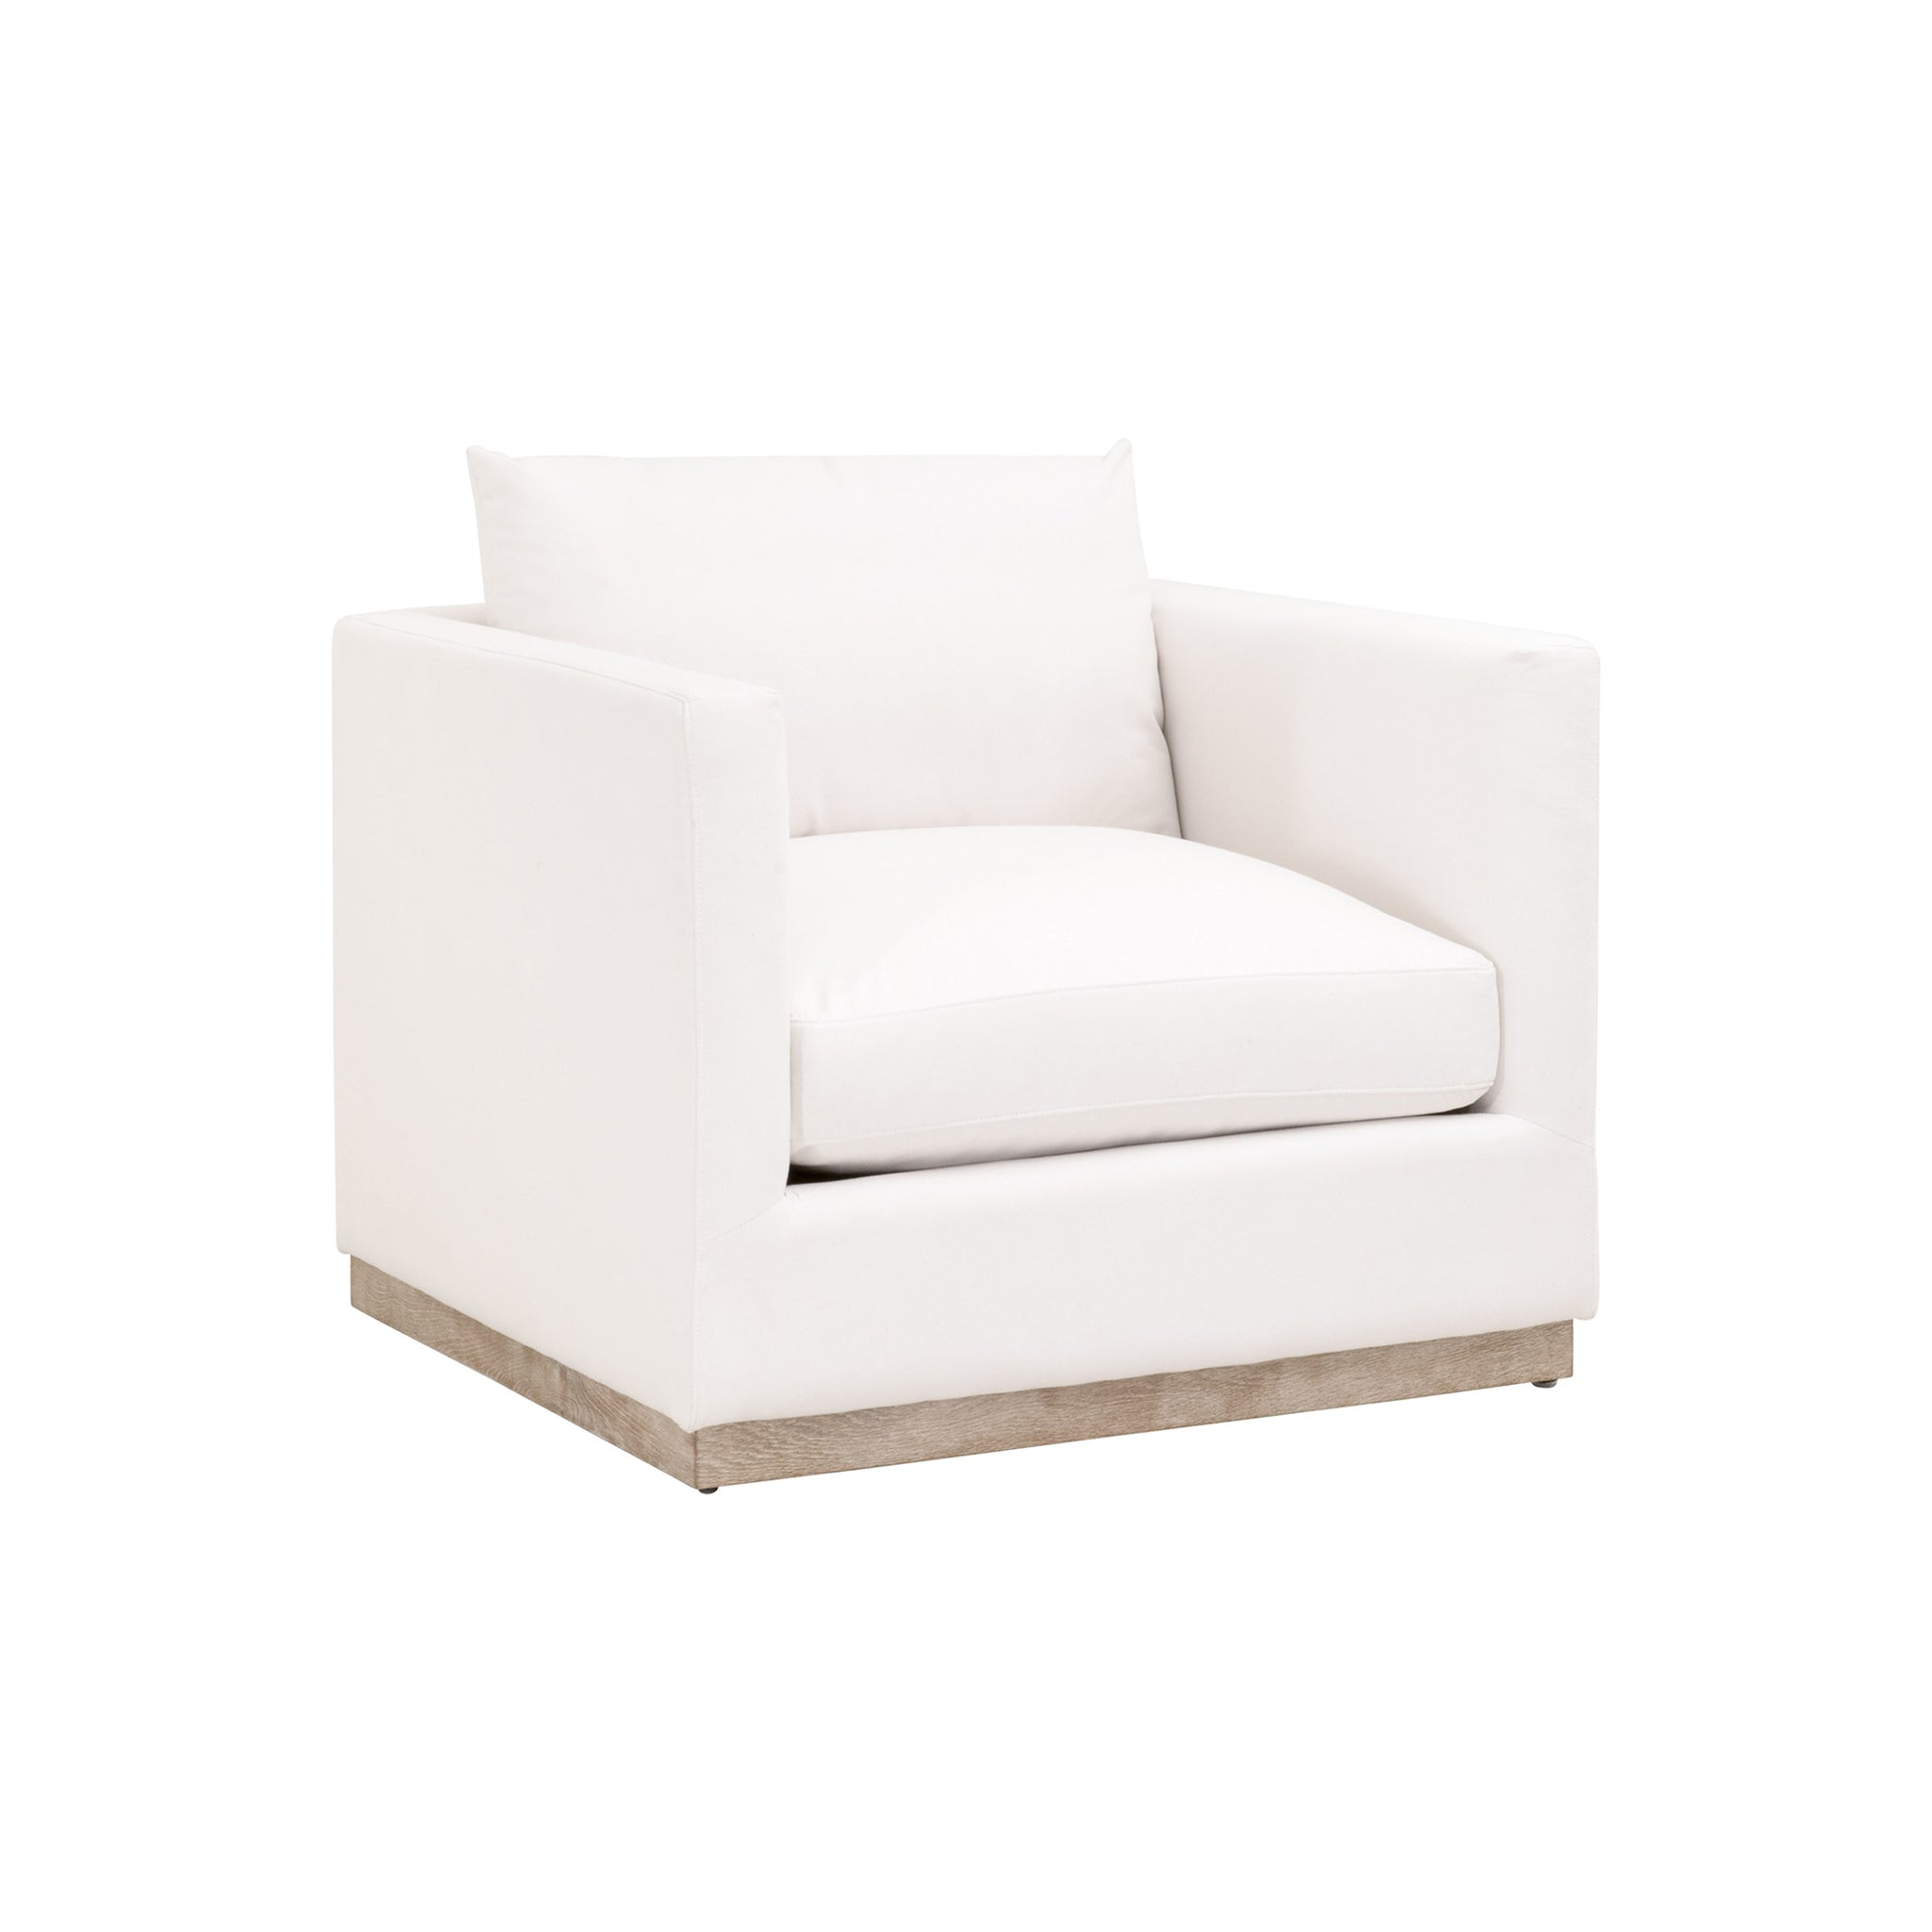 Nelson Plinth Base Sofa Chair